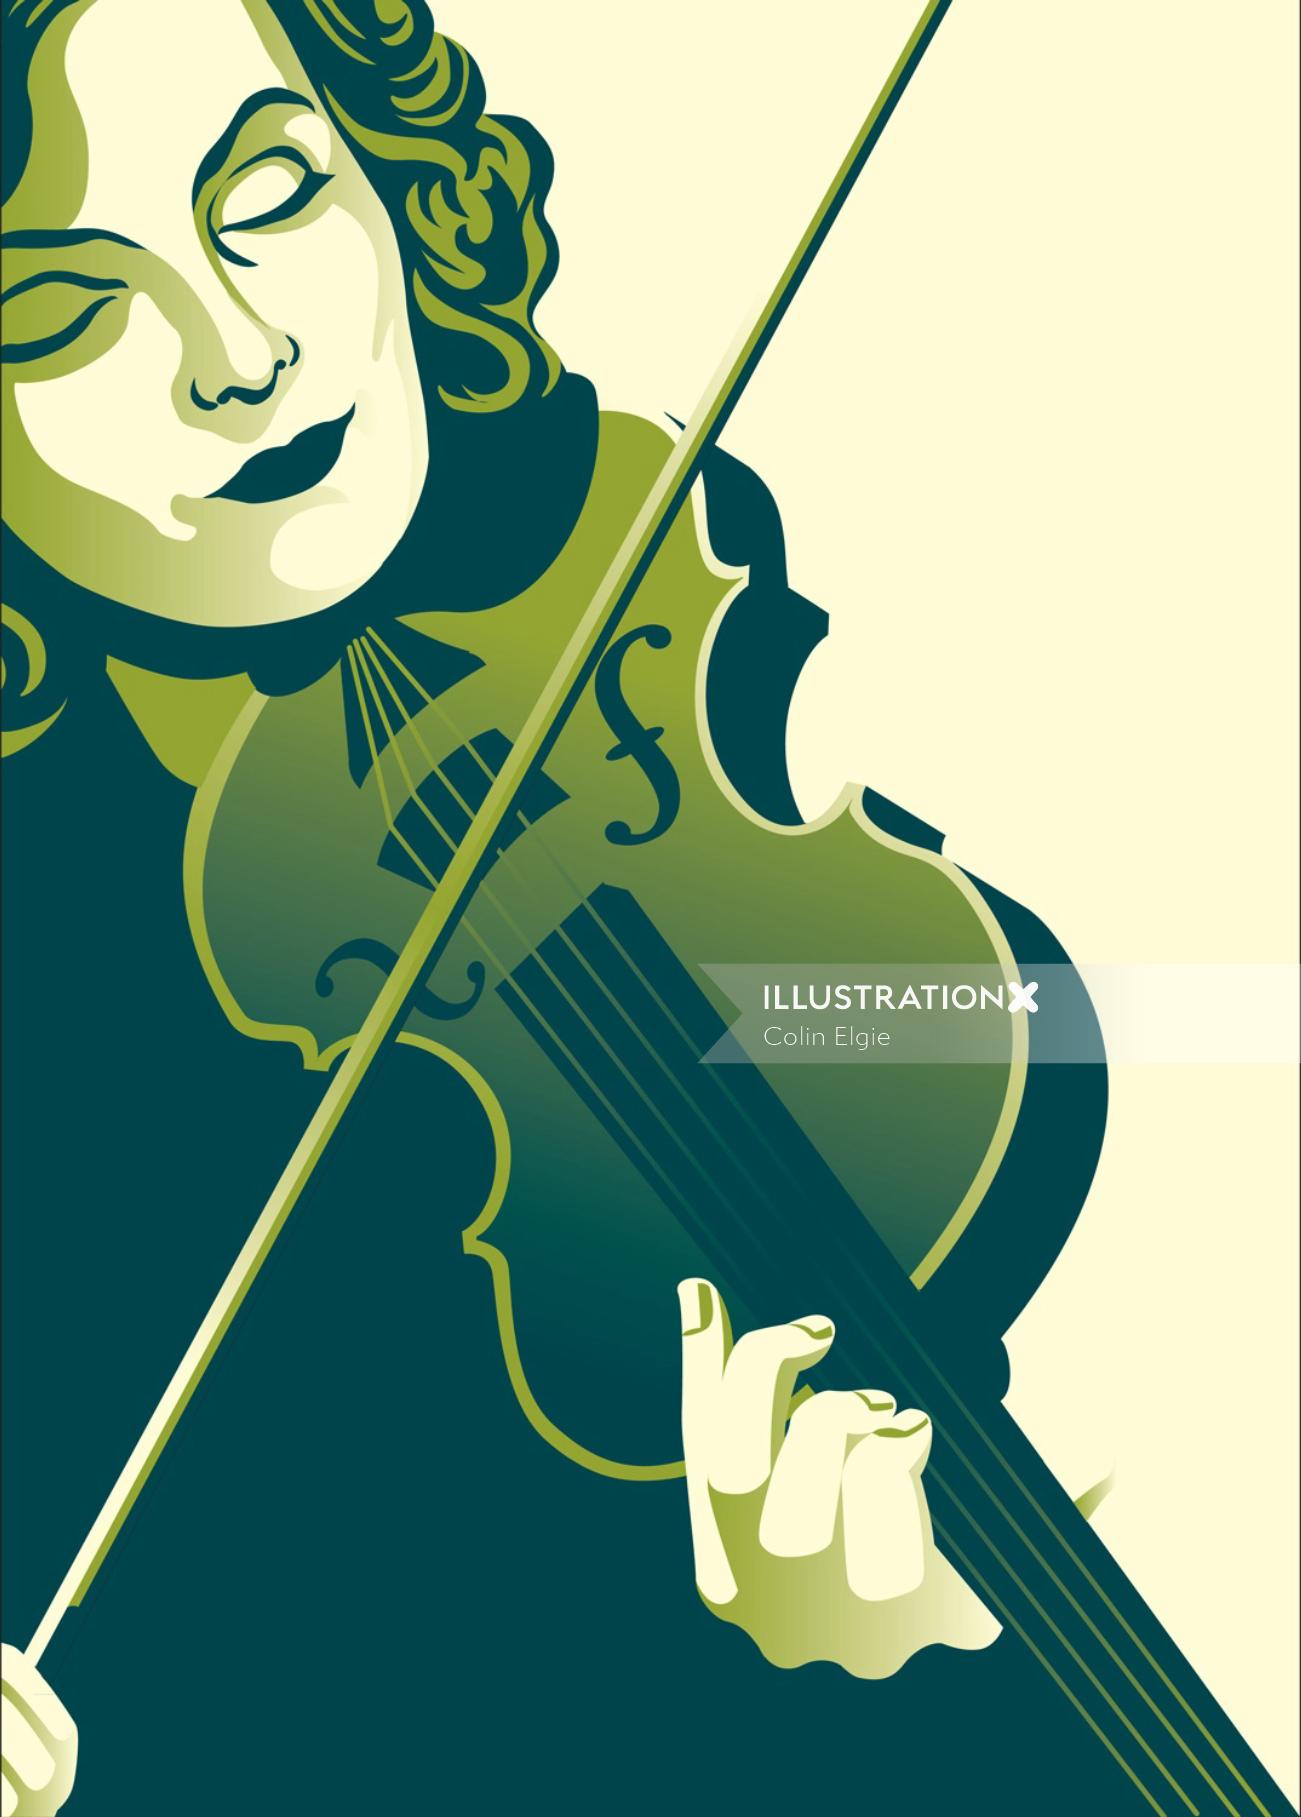 Lady playing violin illustration